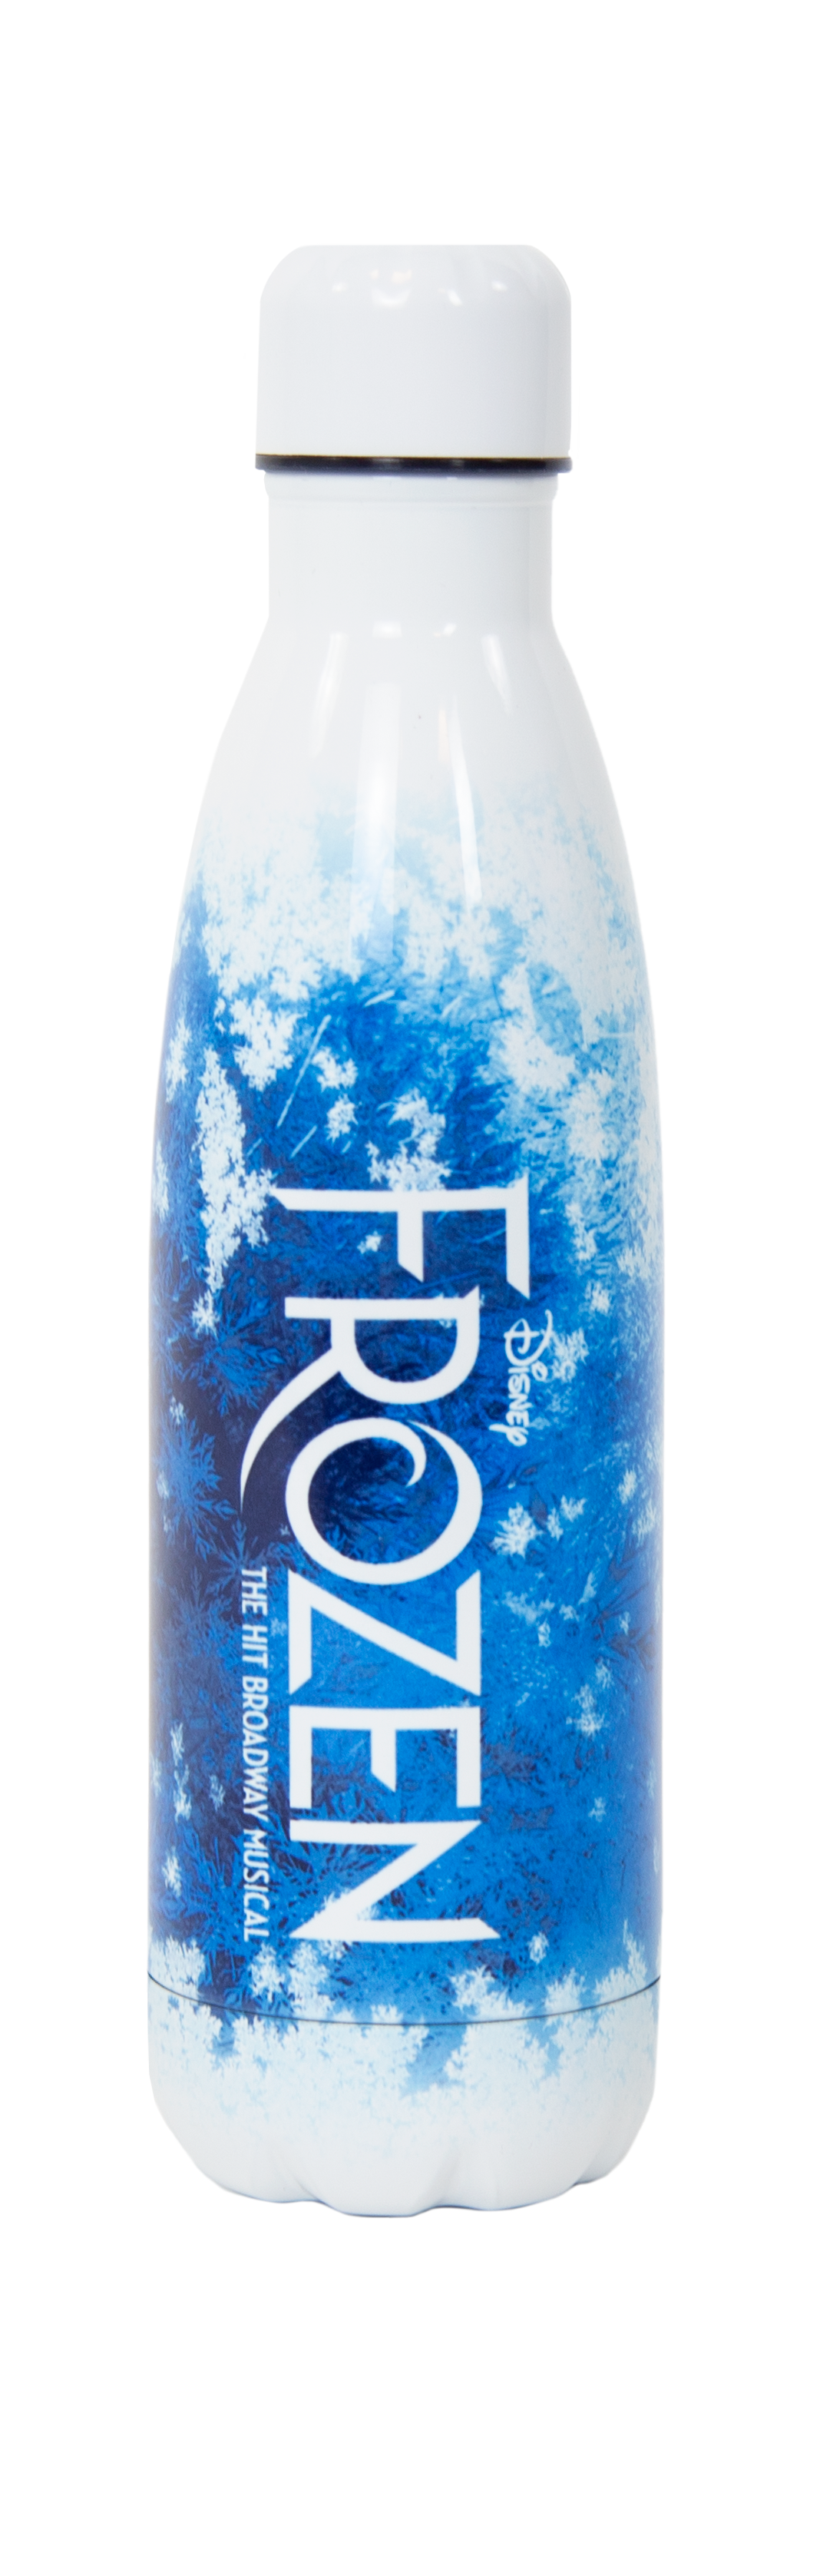 Frozen the Broadway Musical Logo Water Bottle - Frozen